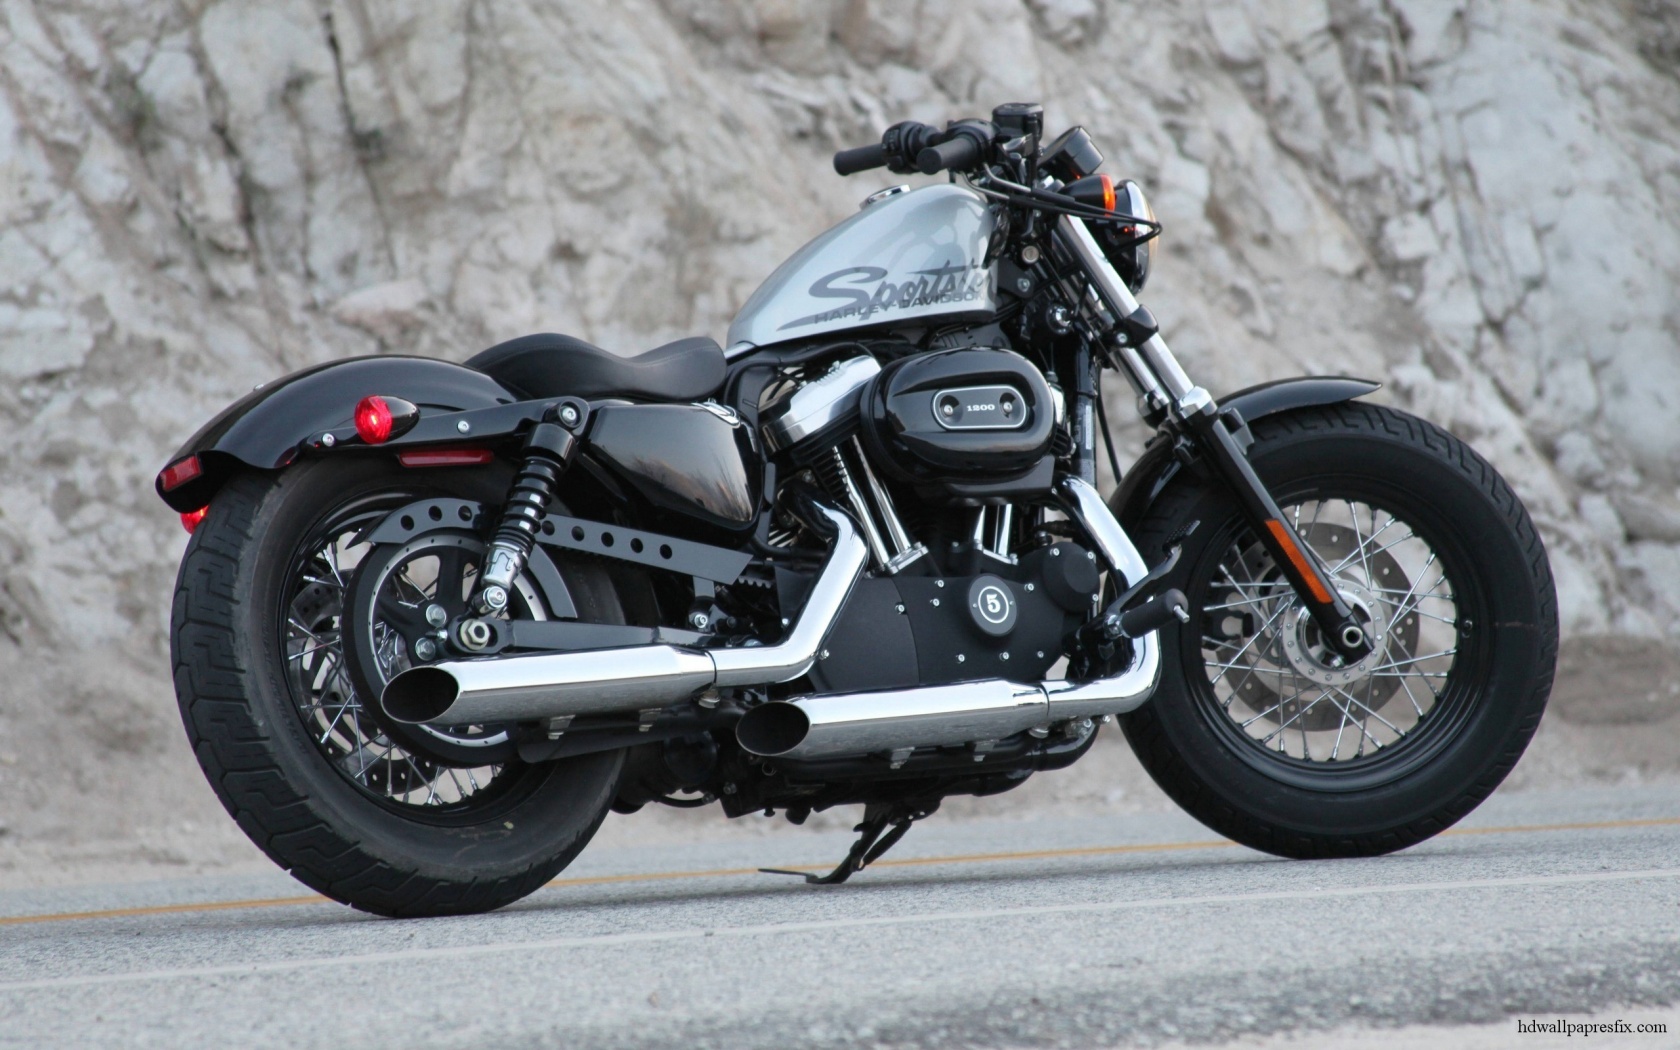 Harley Davidson Wallpapers Motorcycle